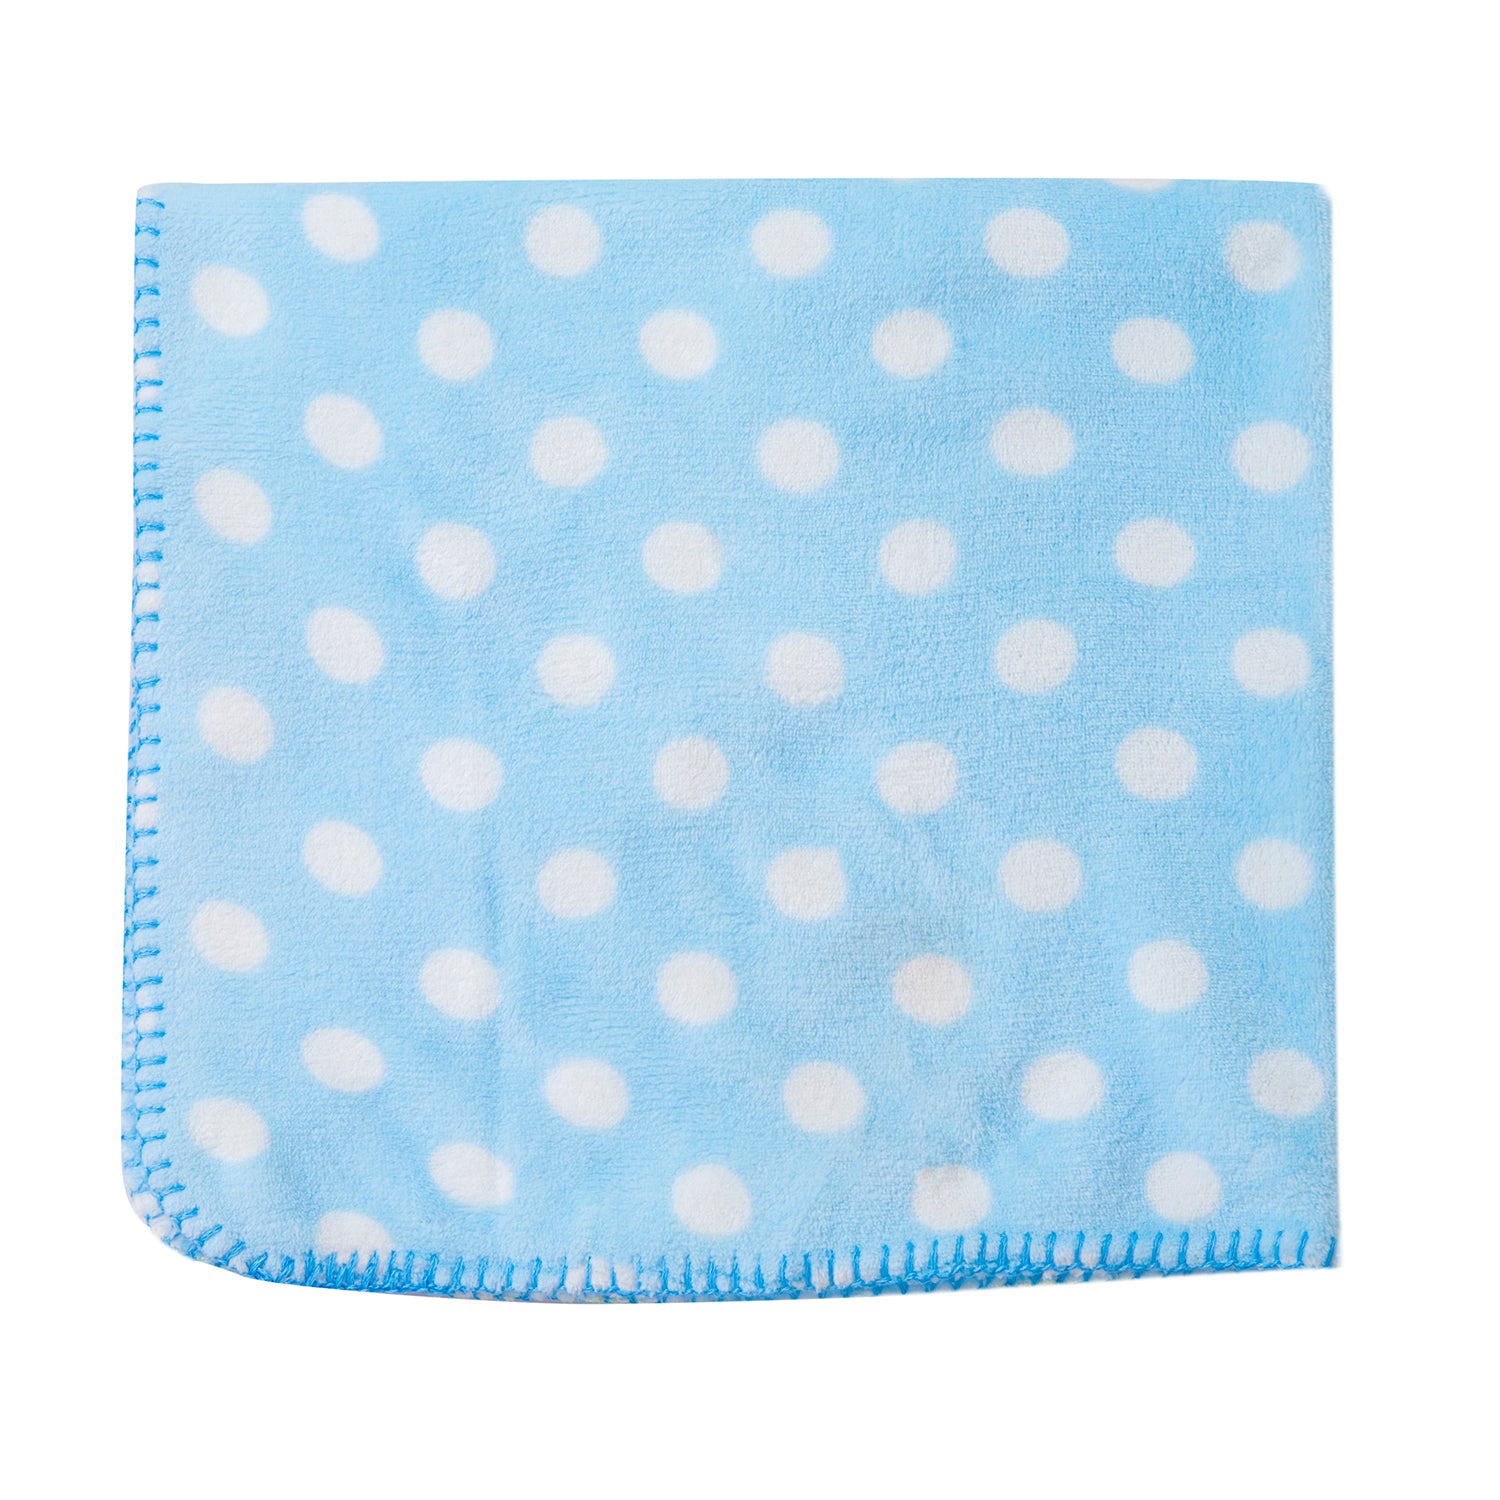 Bear Soft Cozy Plush Toy Blanket Blue